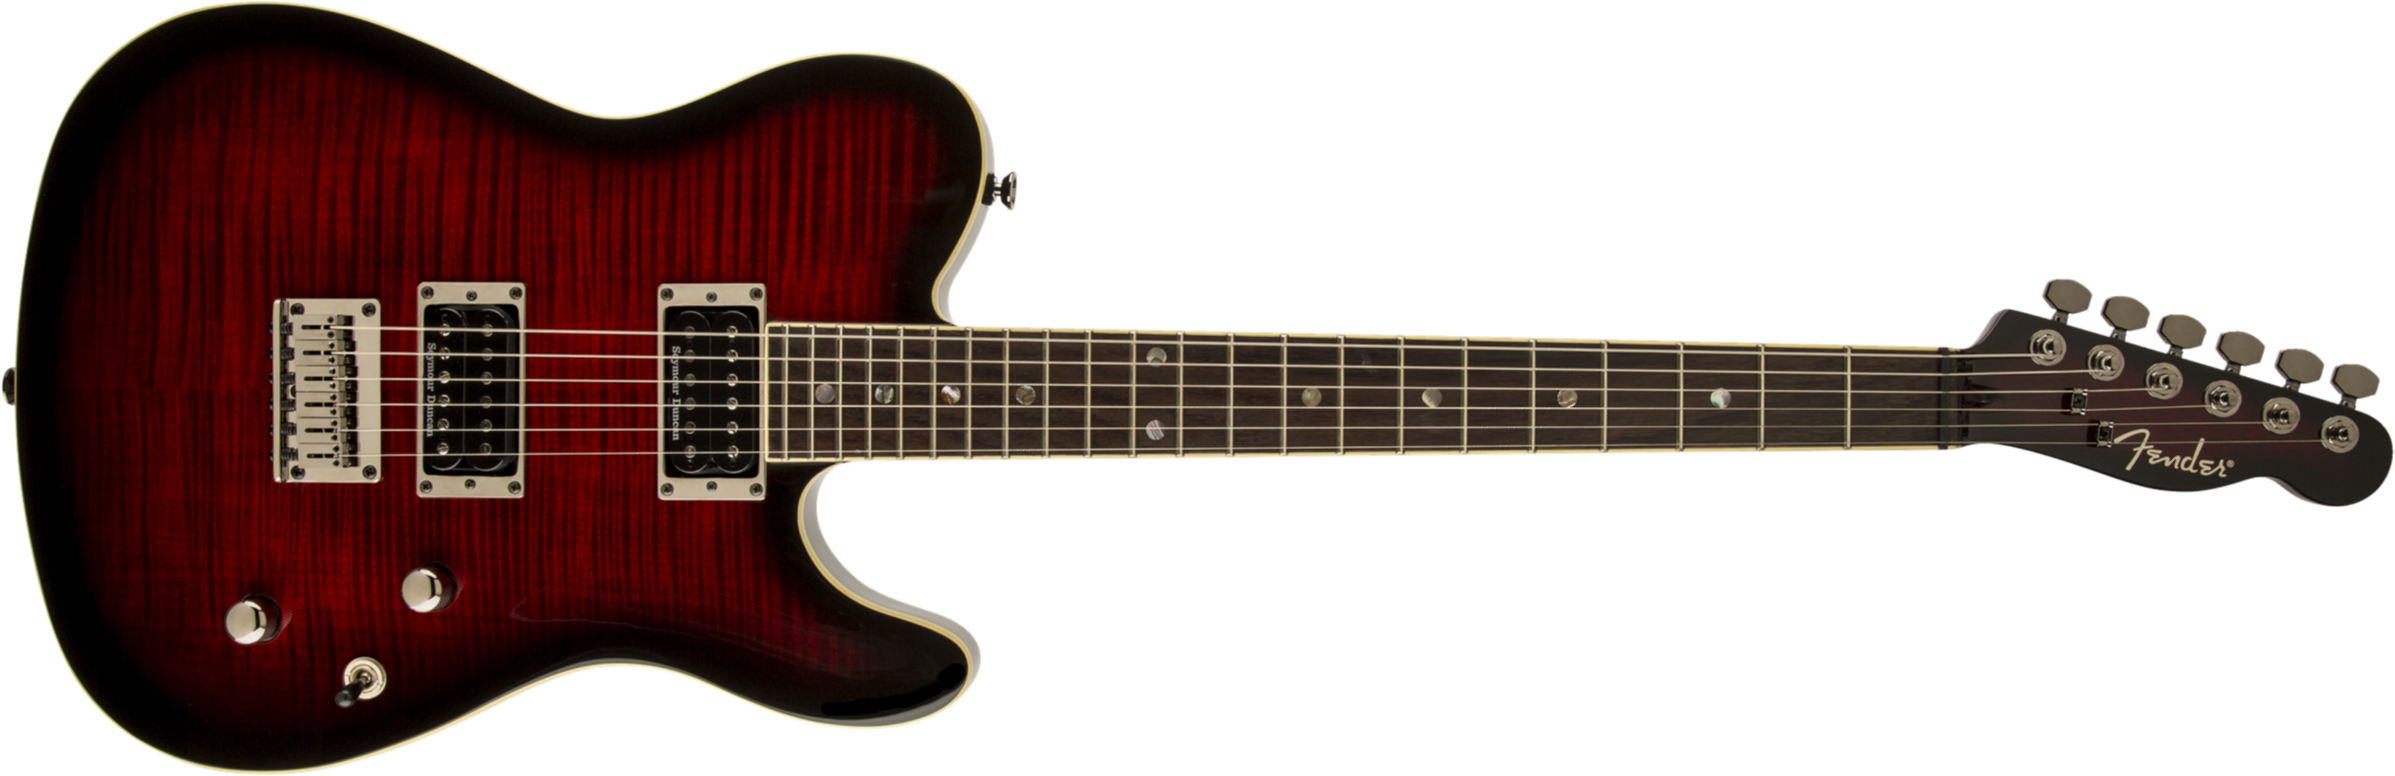 Fender Telecaster Korean Special Edition Custom Fmt (lau) - Black Cherry Burst - Tel shape electric guitar - Main picture